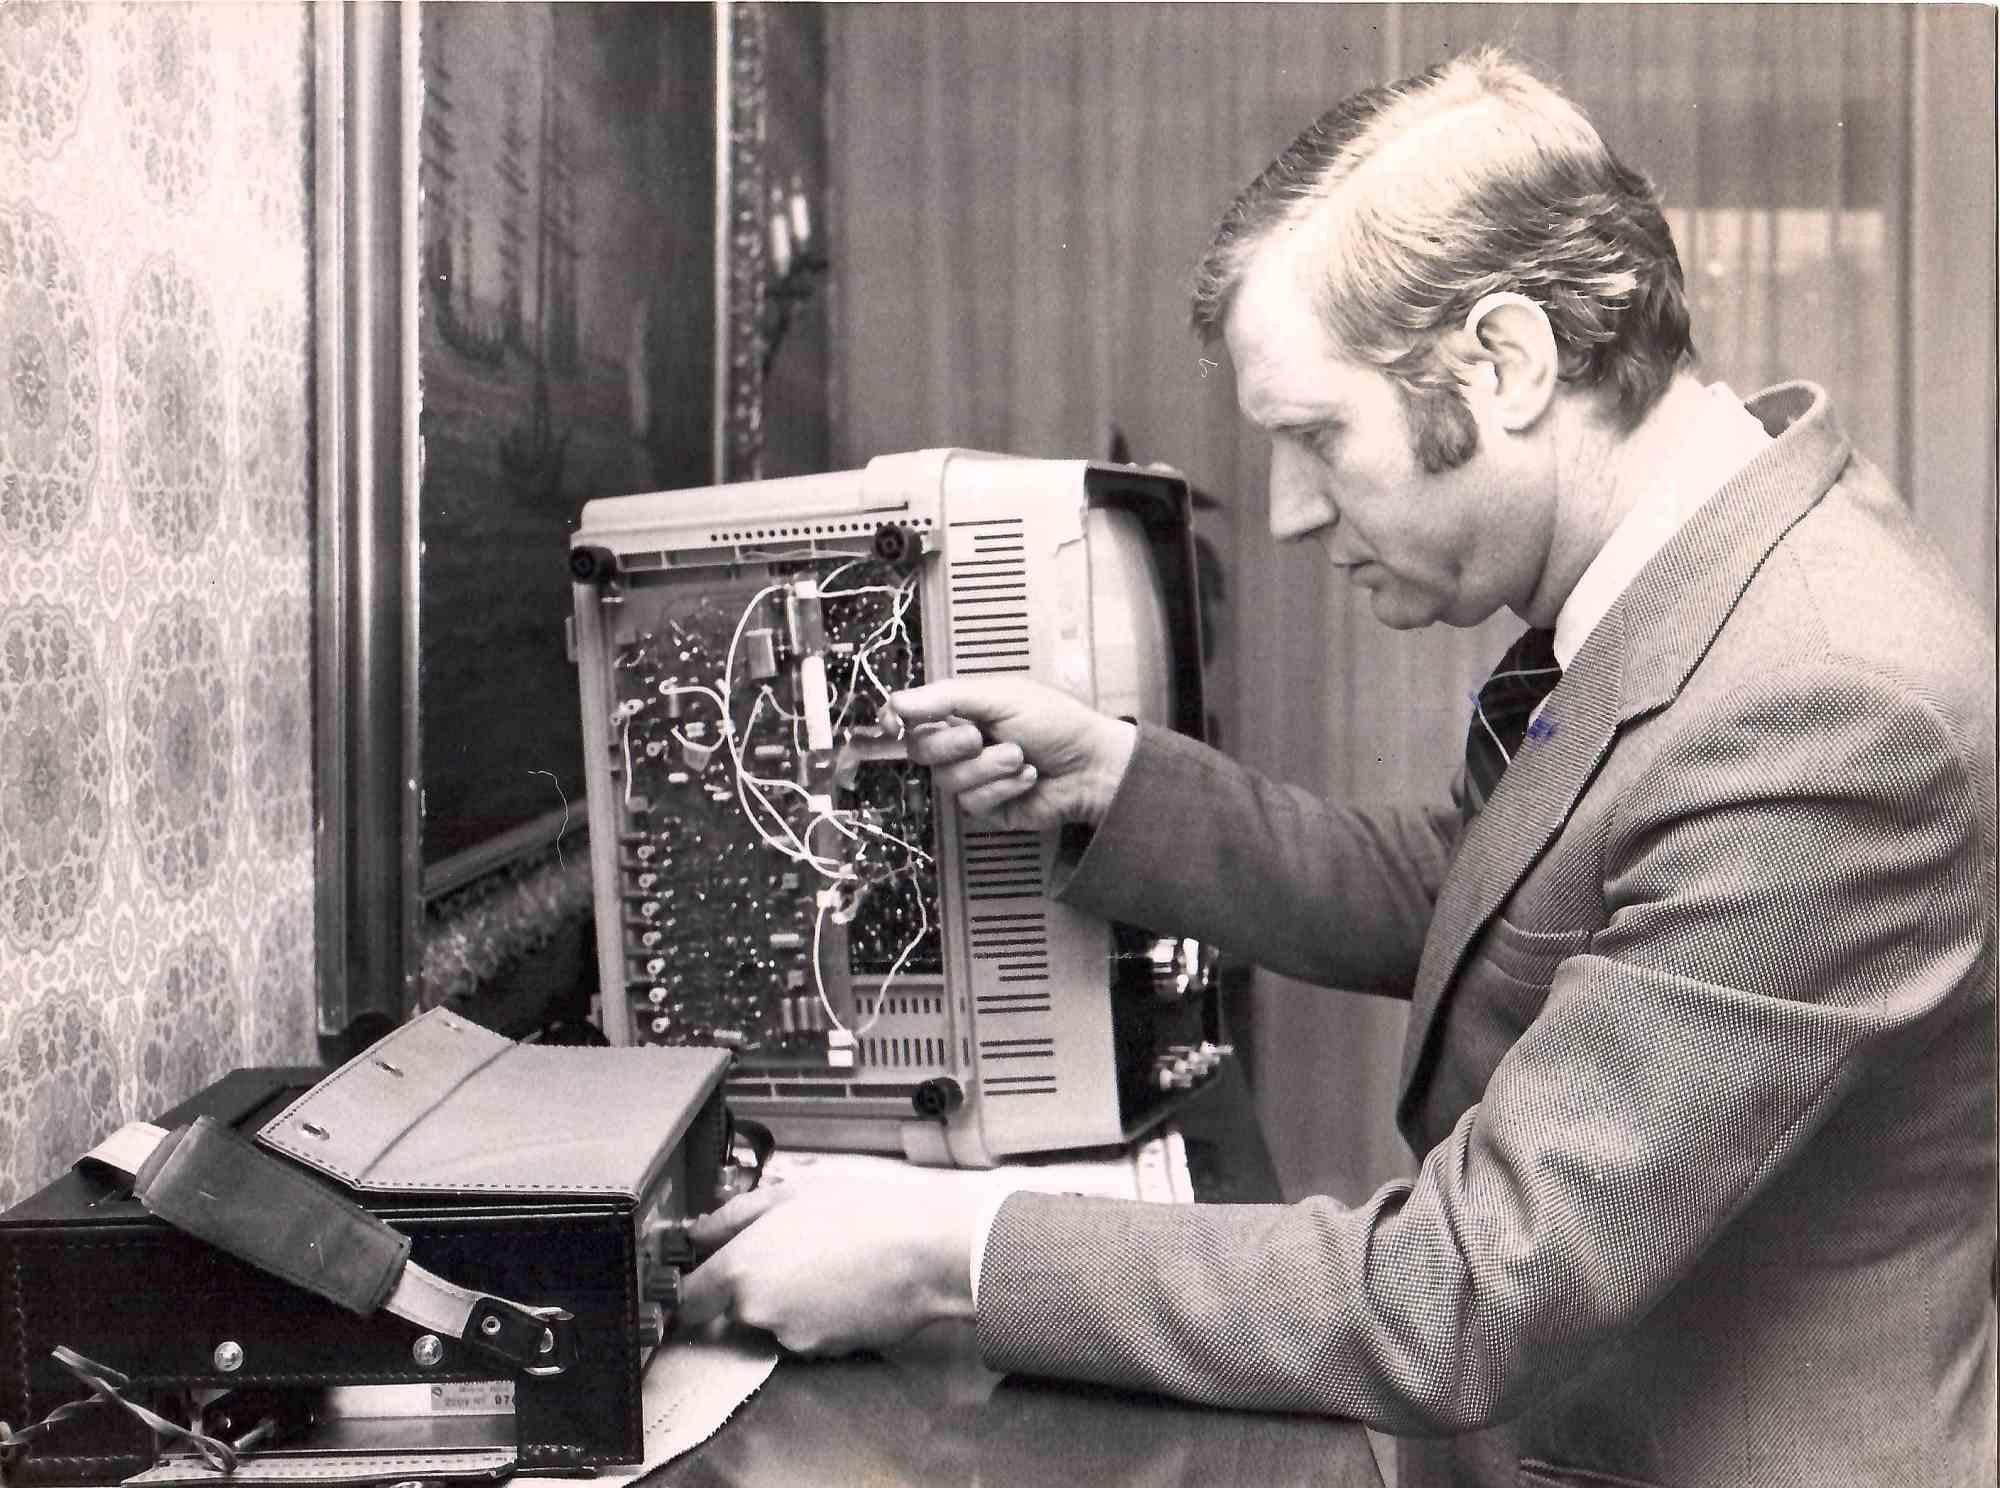 Unknown Portrait Photograph - Tv system, Technology in Progress, Historical Photograph - Vintage Photo - 1970s